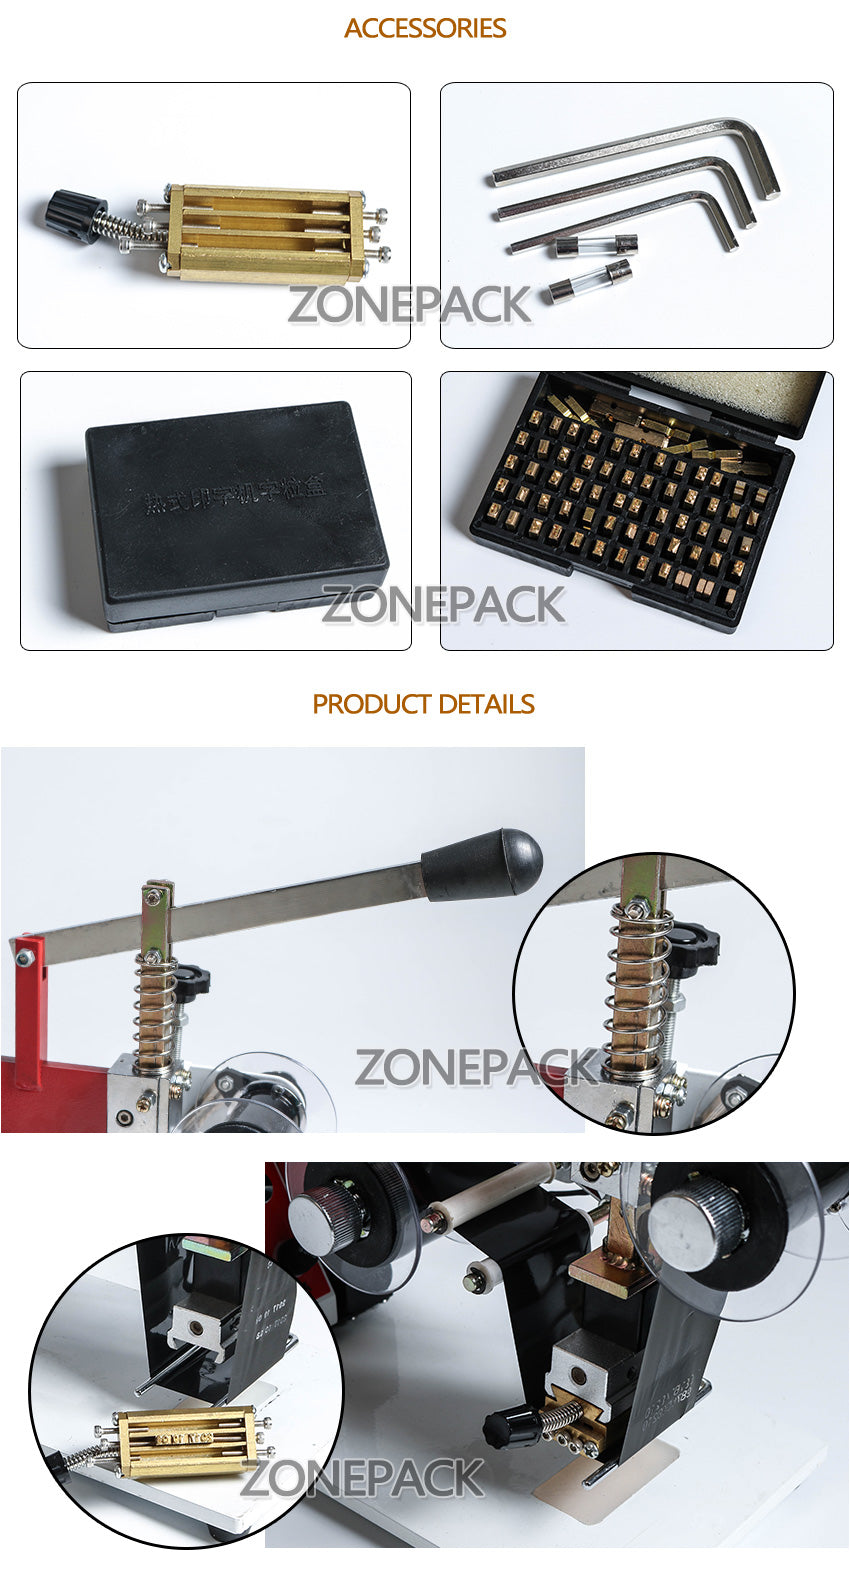 ZONEPACK ZY-RM5-E(2) Color Ribbon Hot Printing Machine,Date Code Ribbon Printer,Hot Foil Stamping Machine,Batch Number Foil Embosser